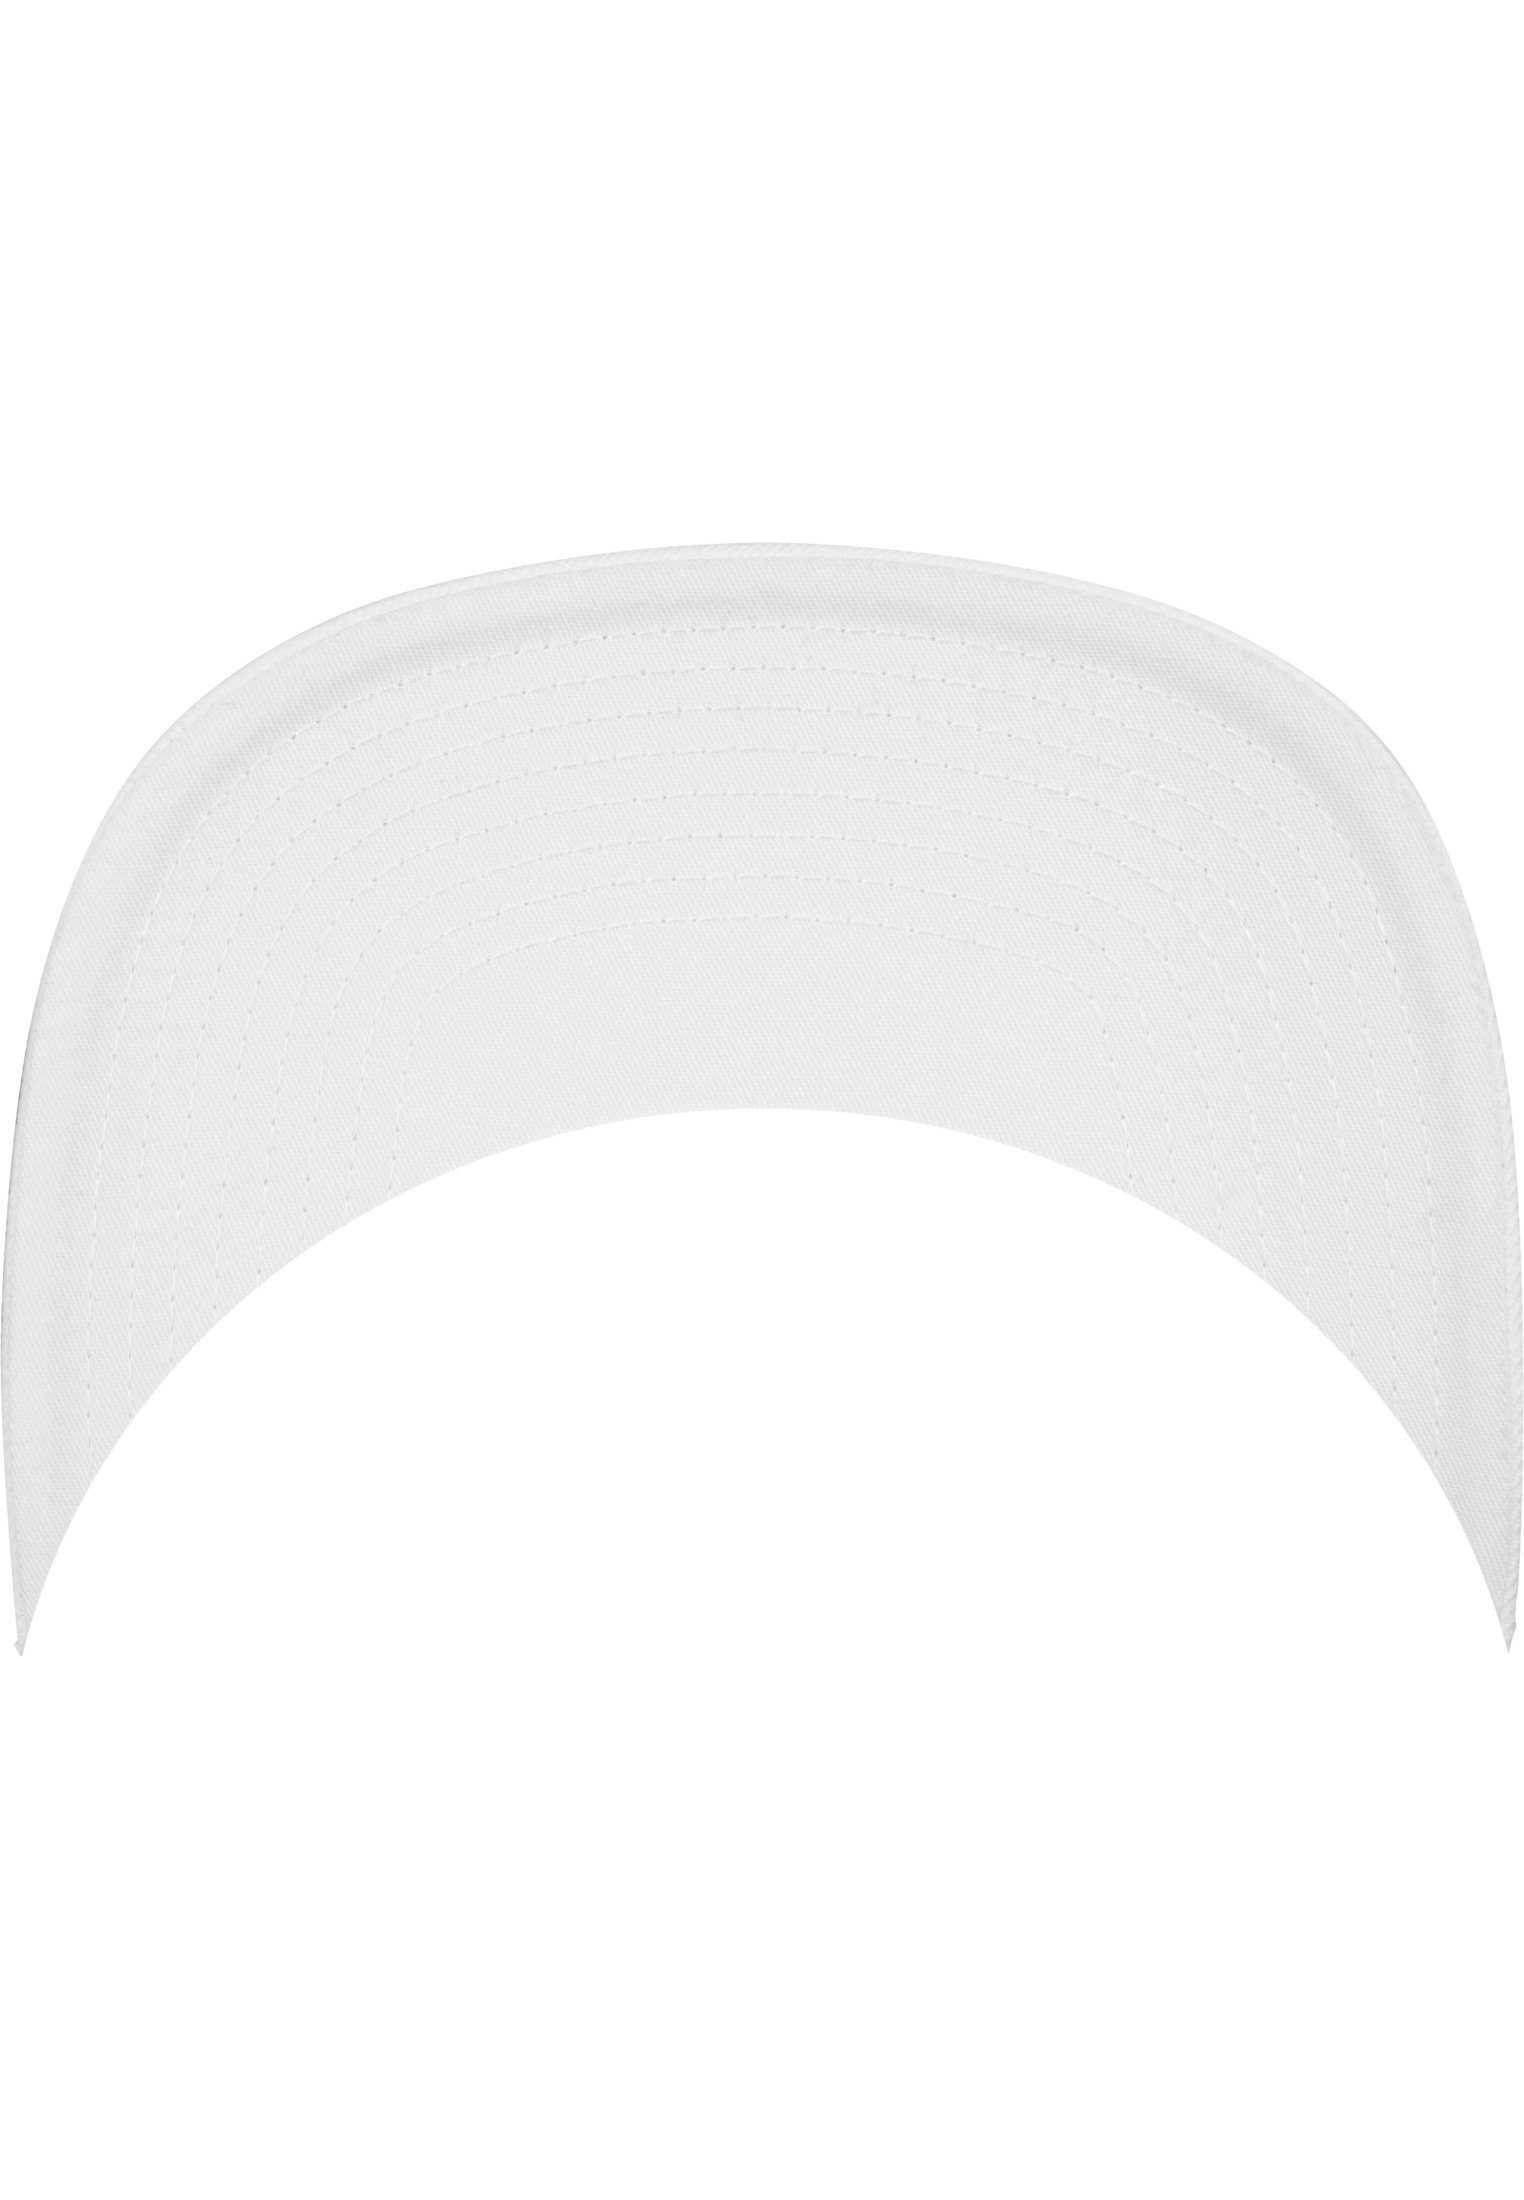 Flexfit Flex Bandana white/white Tie Cap Snapback Snapback